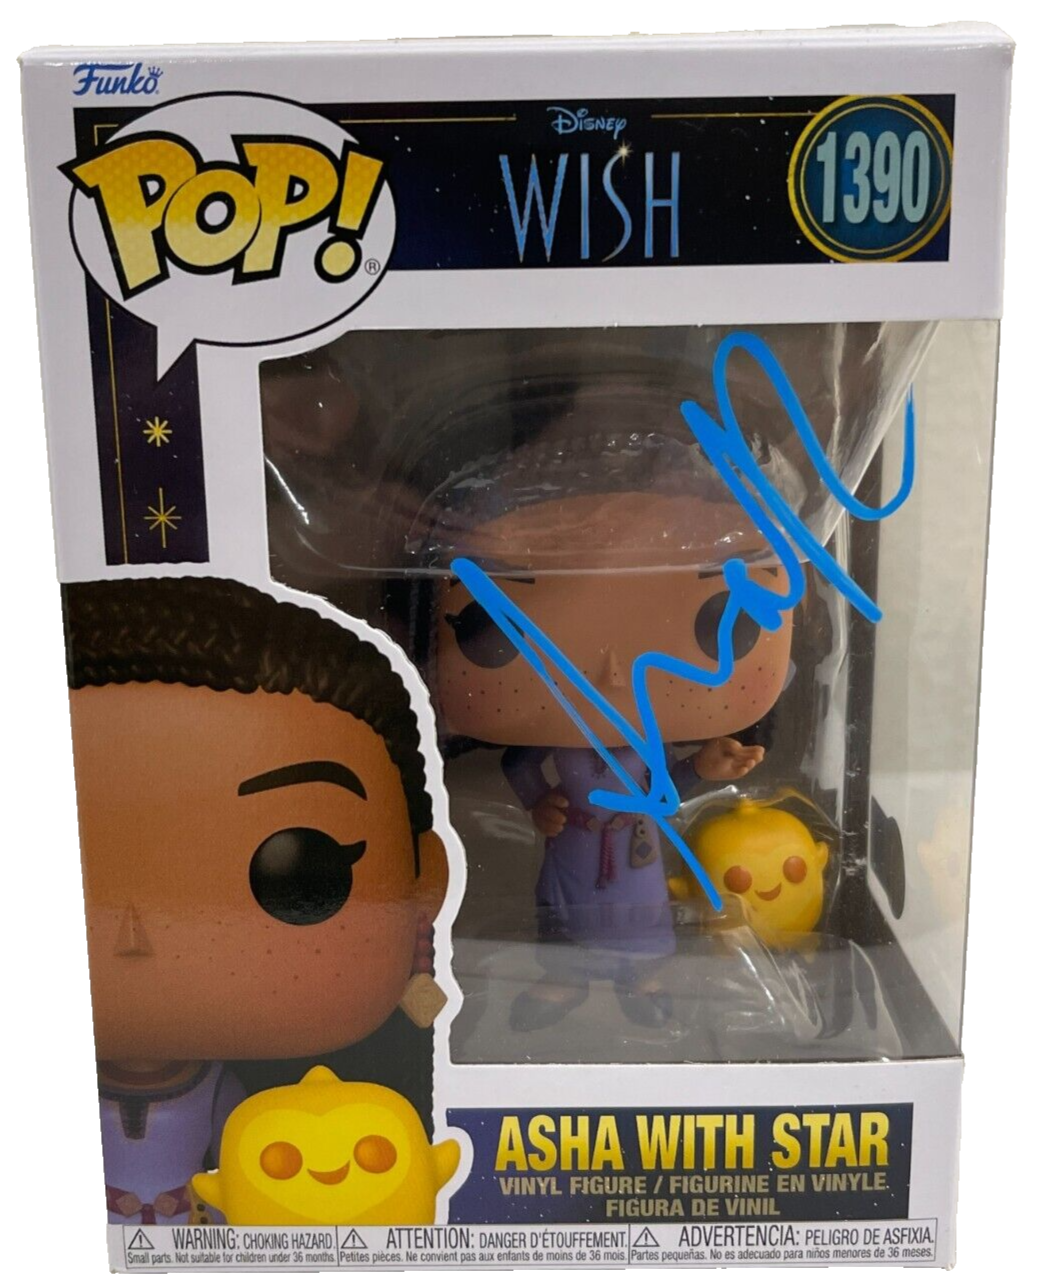 Ariana Debose Authentic Autographed Asha with Star Wish 1390 Funko Pop Figure